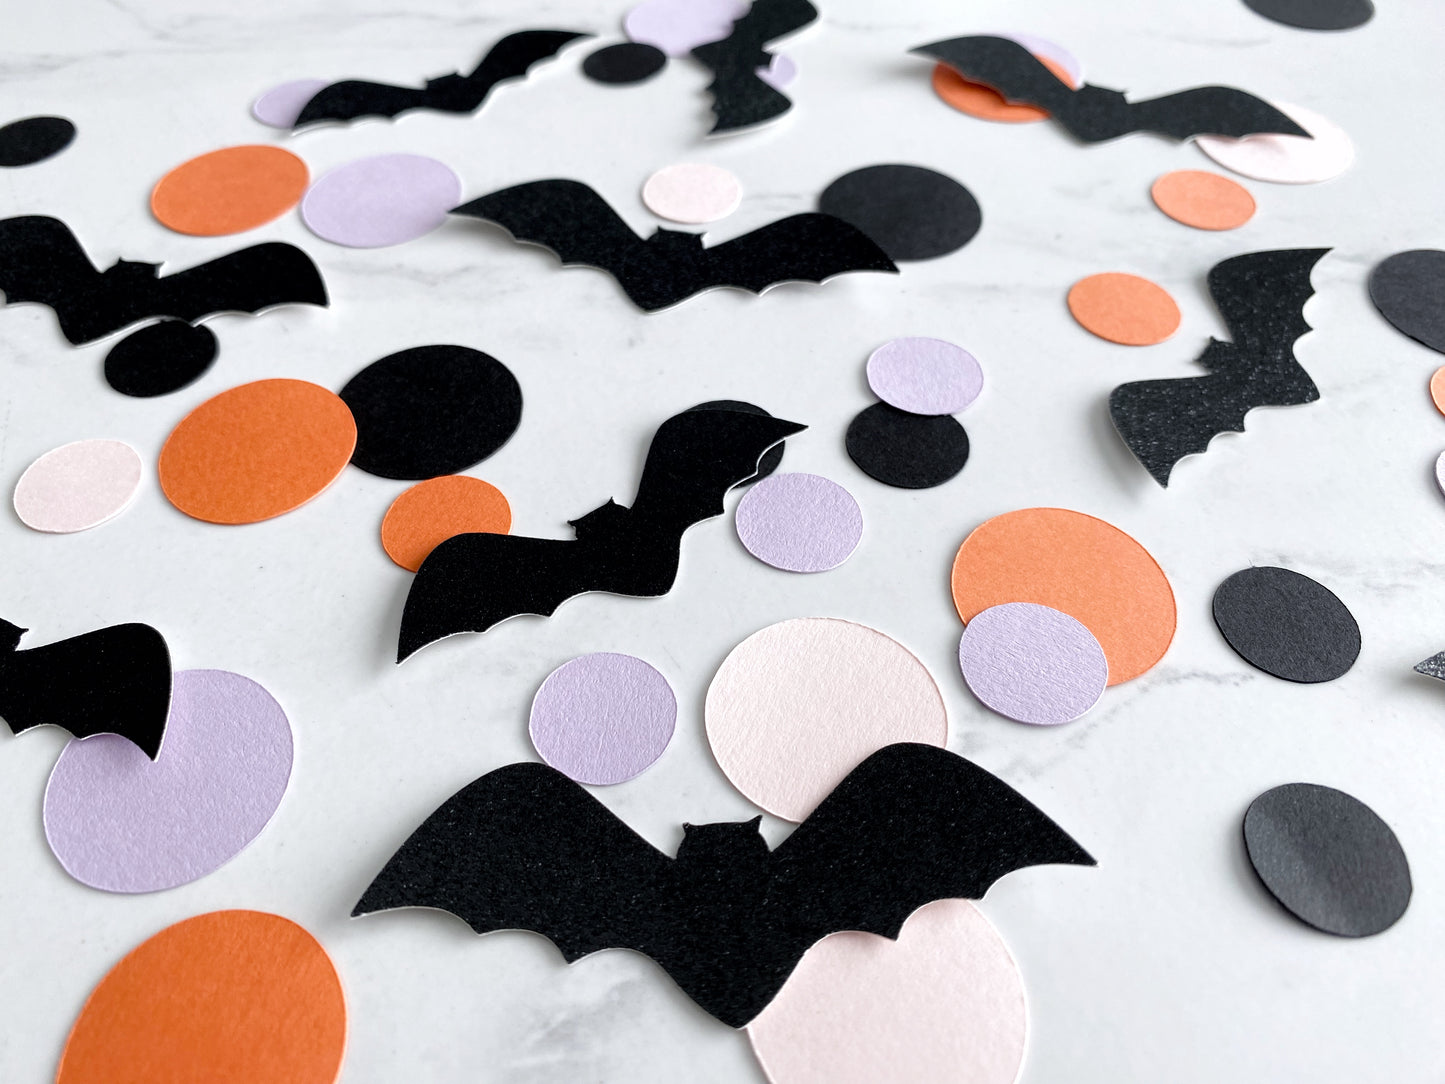 Bat Confetti With Circles